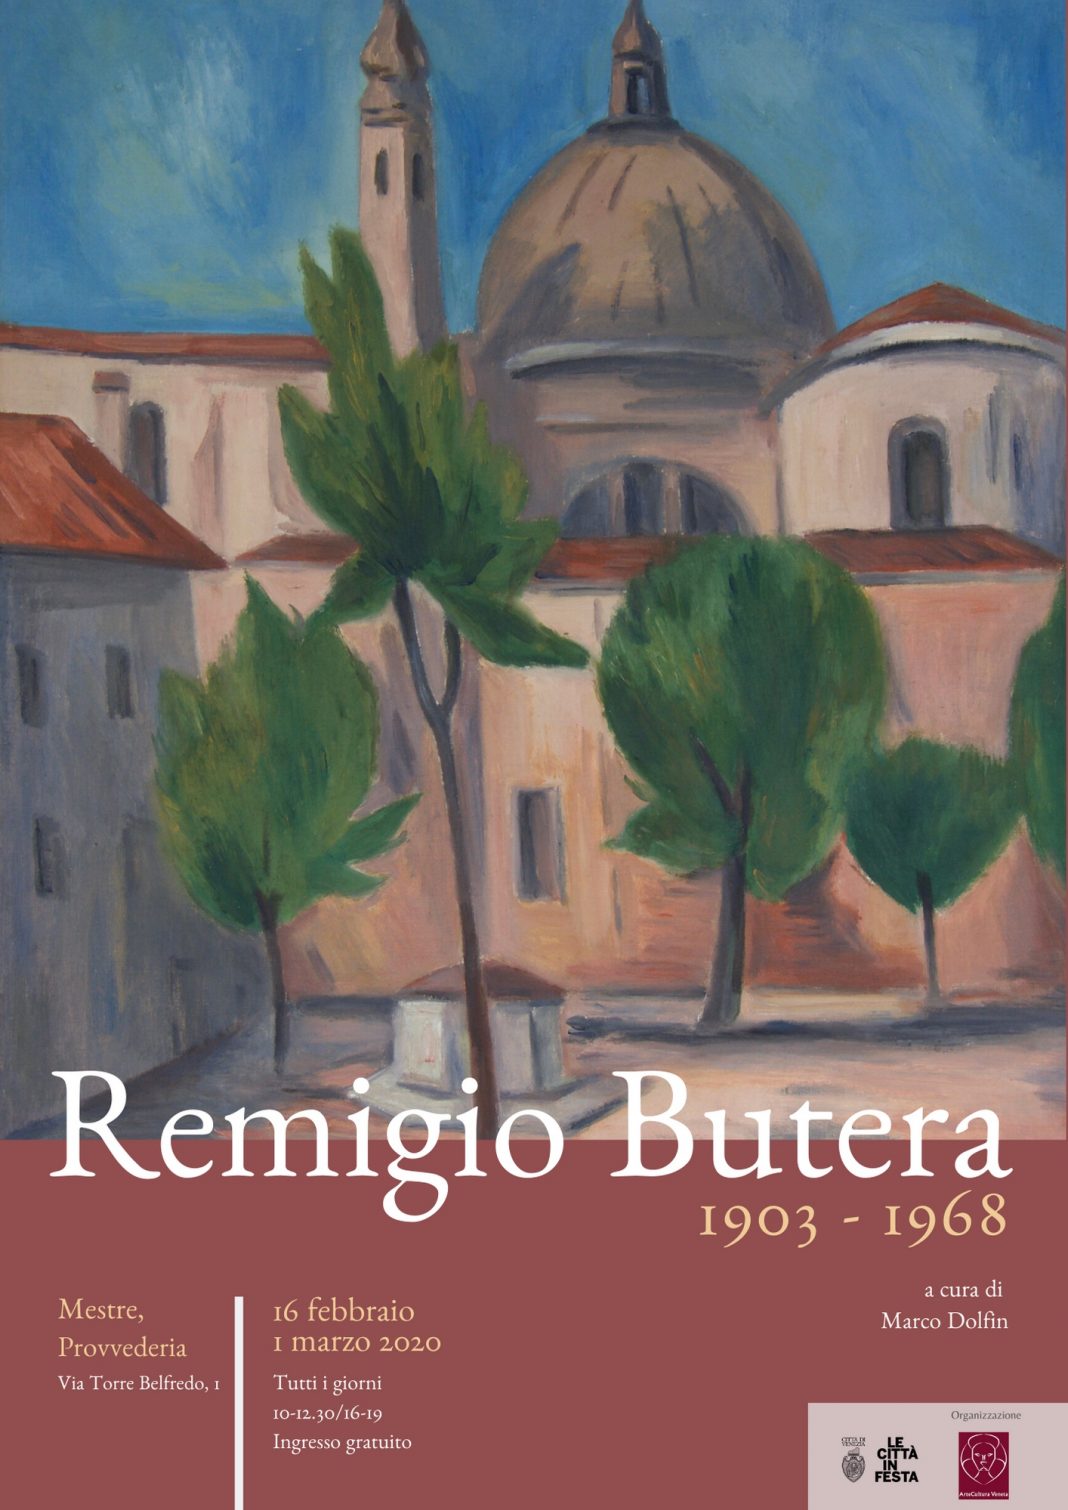 Remigio Butera (1903 -1968)https://www.exibart.com/repository/media/formidable/11/Locandina-Butera-ridotta-1068x1510.jpg